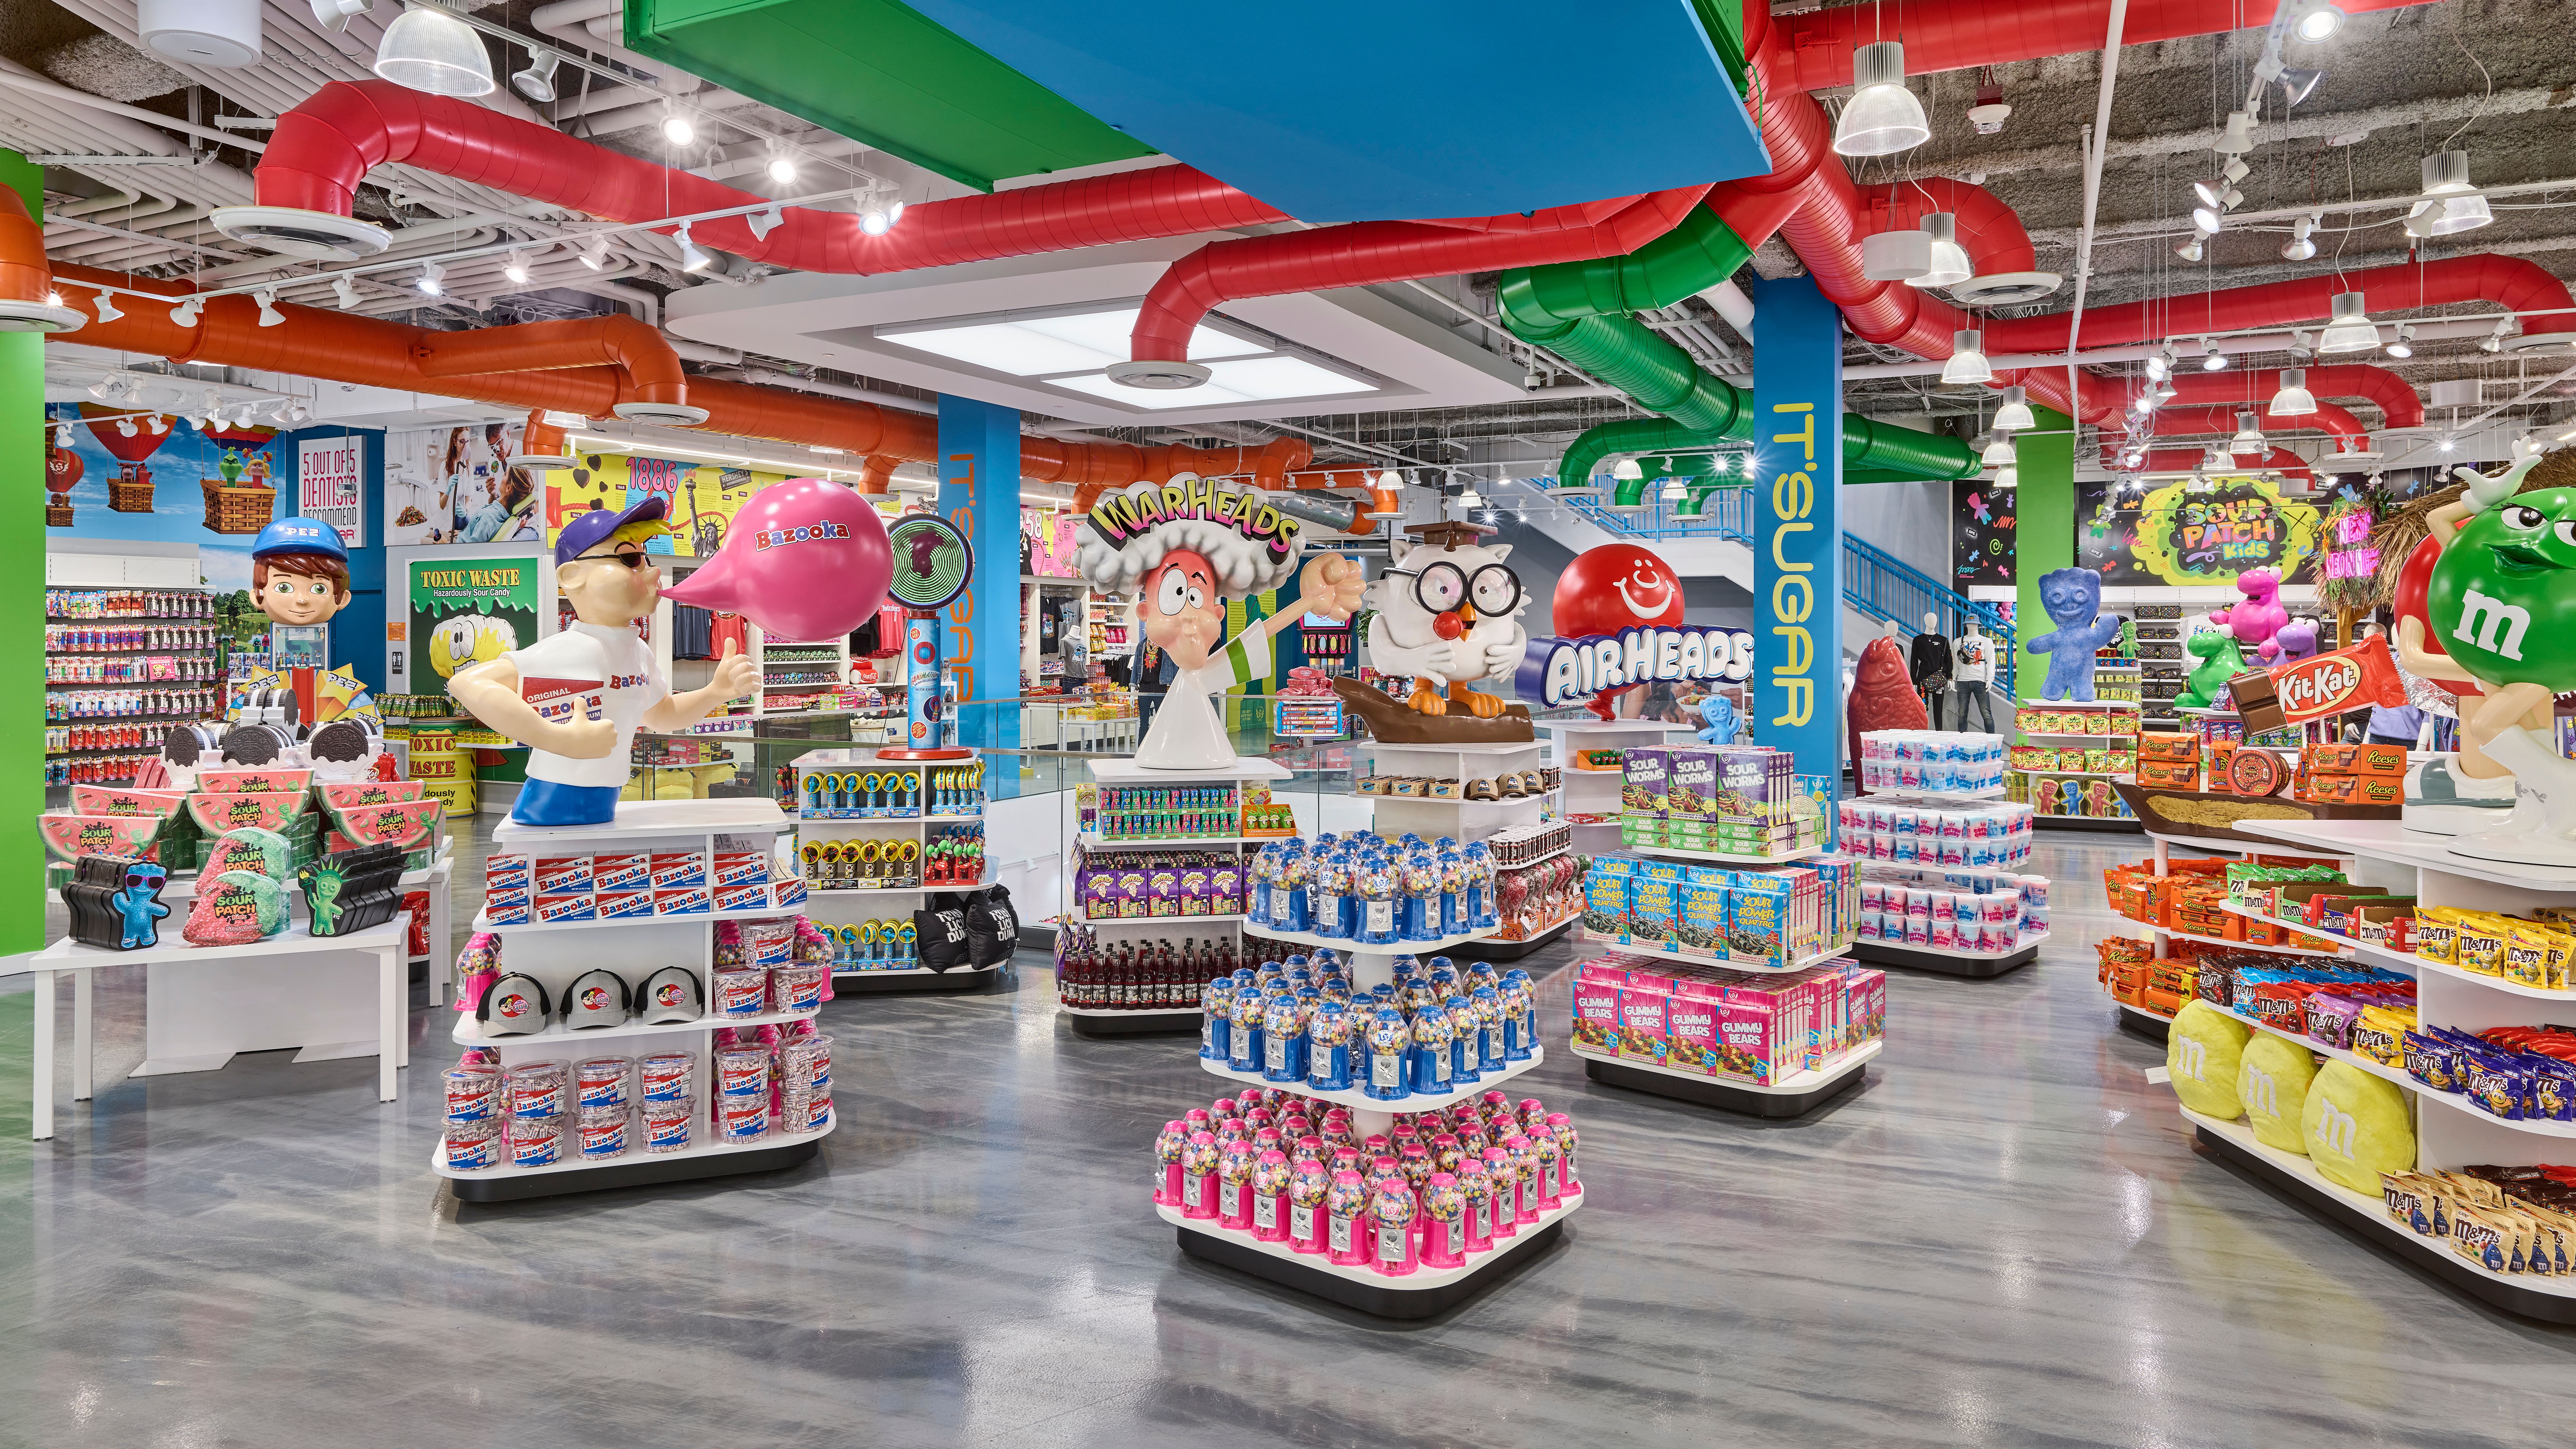 IT'SUGAR opening massive candy store at Ala Moana Center – Hawaii